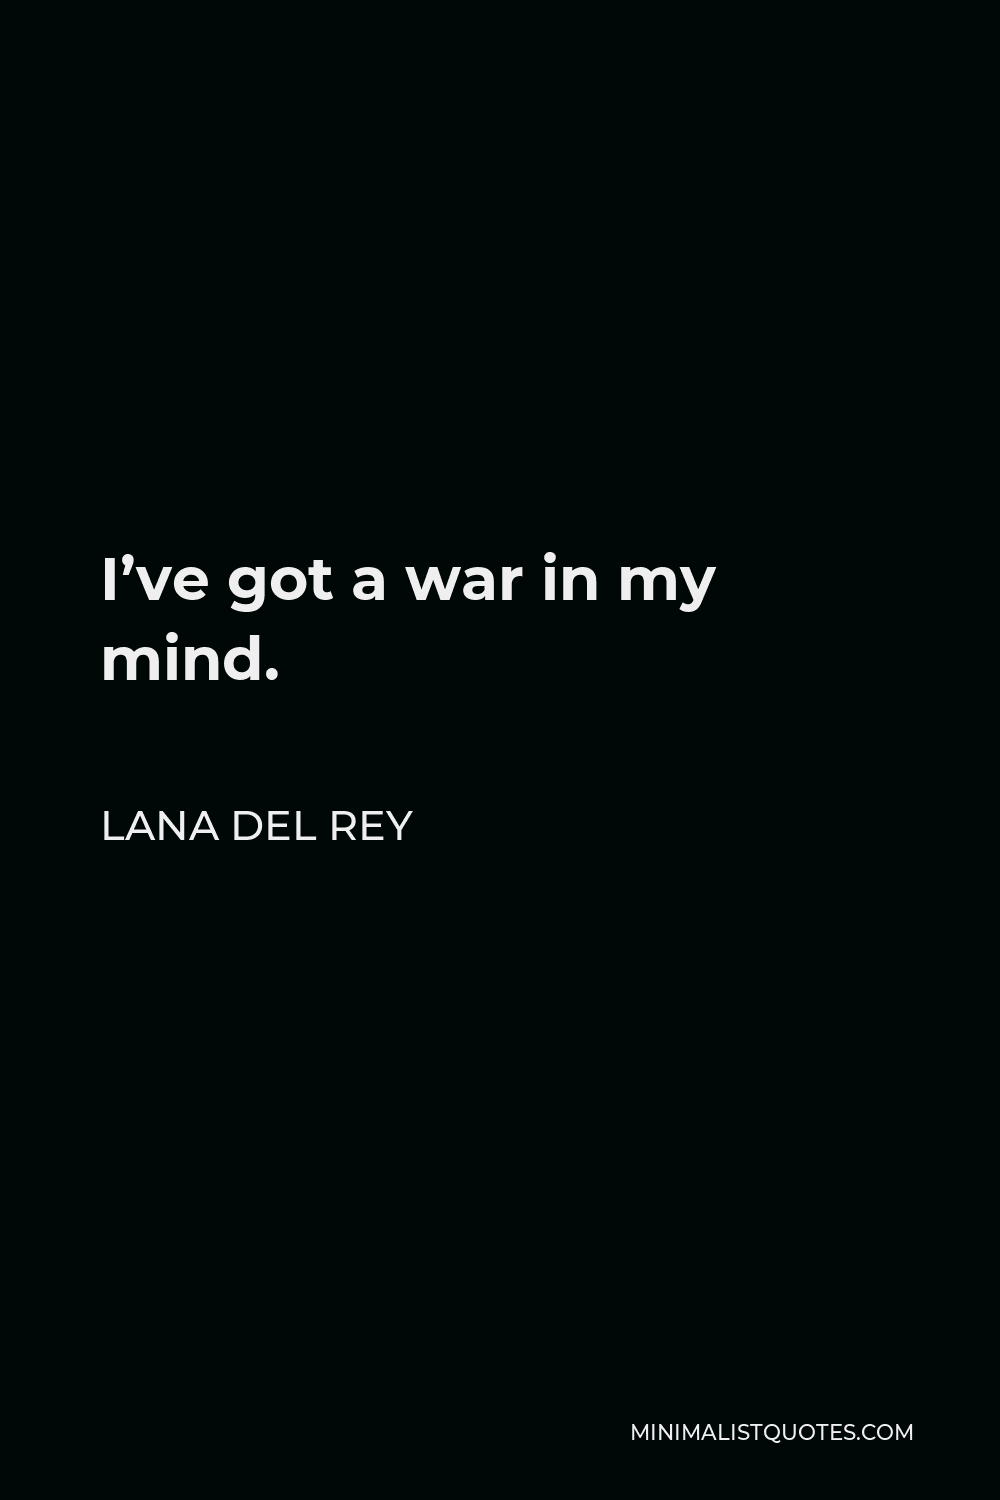 Lana Del Rey Quote - I’ve got a war in my mind.